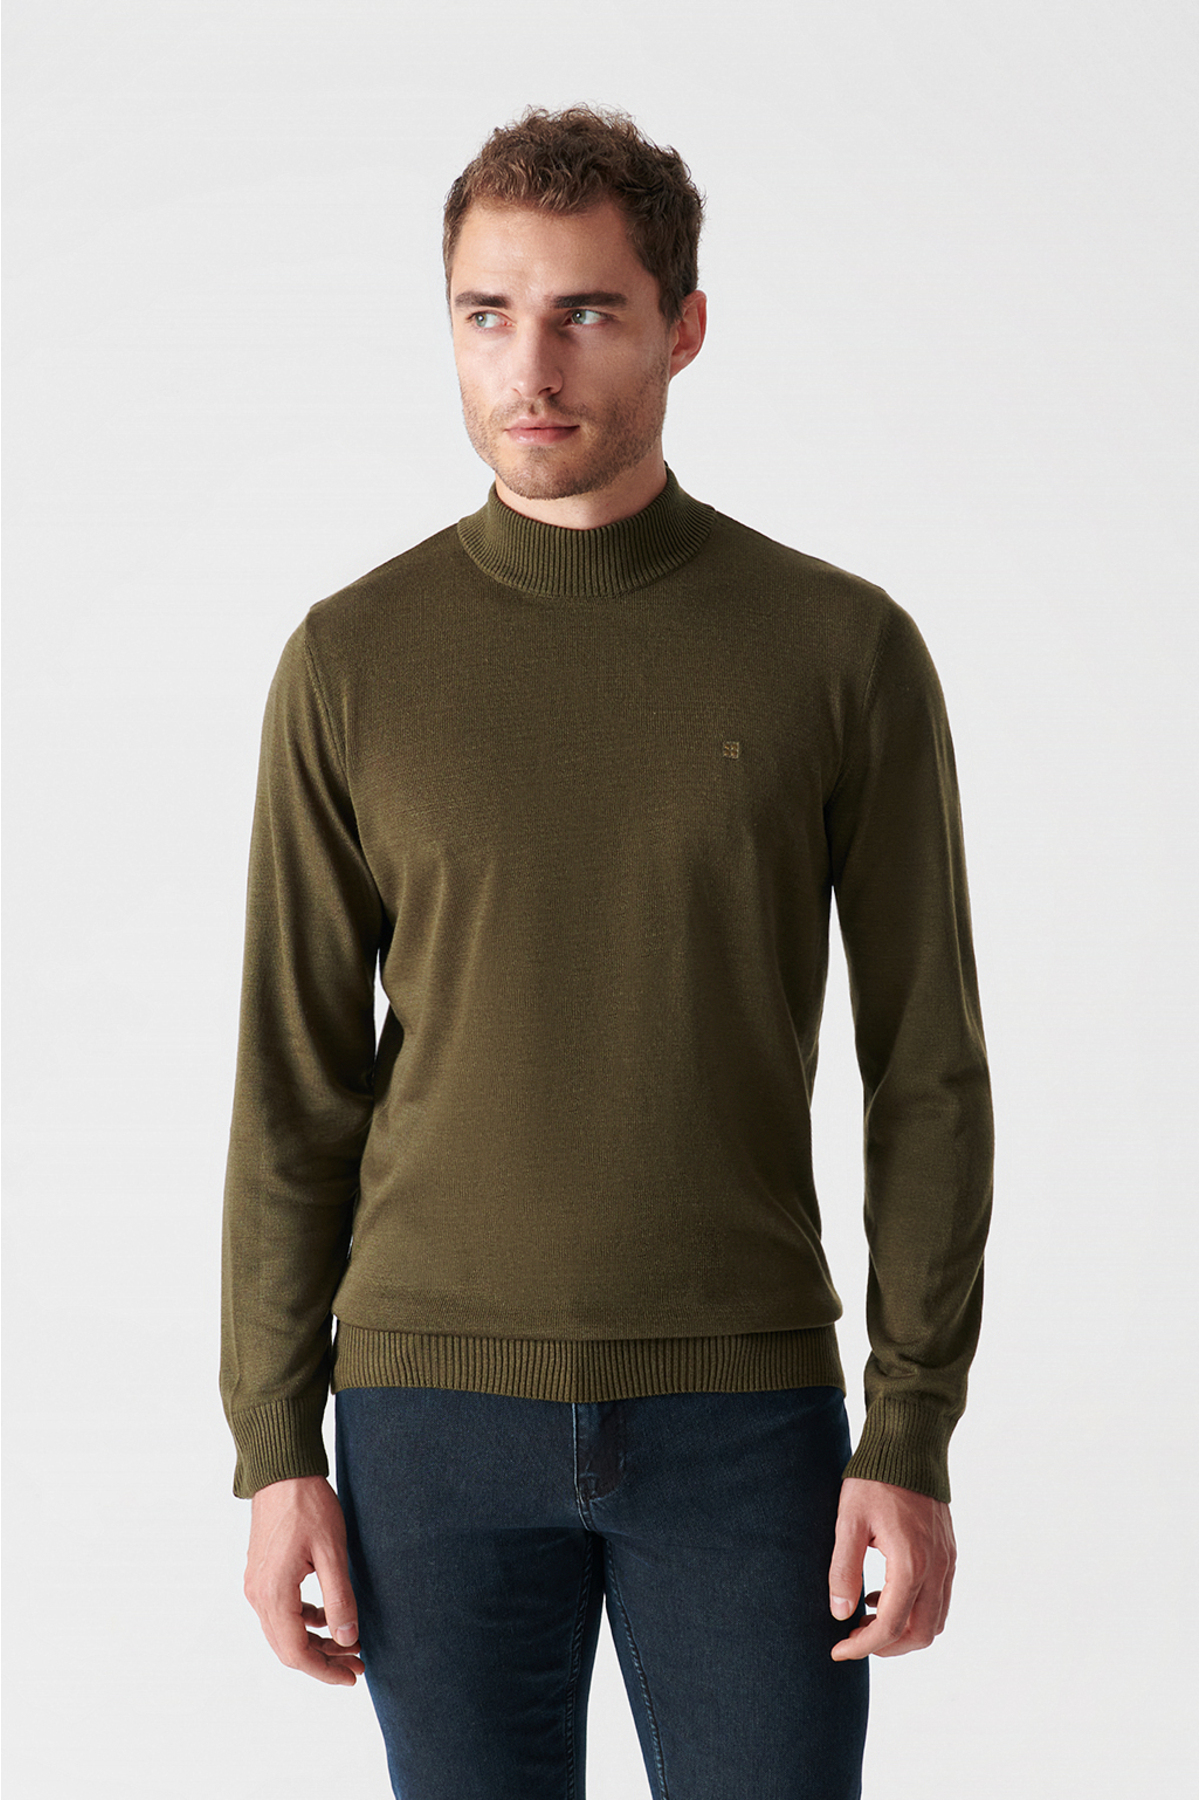 Avva Khaki Unisex Knitwear Sweater Half Turtleneck Non-Pilling Regular Fit